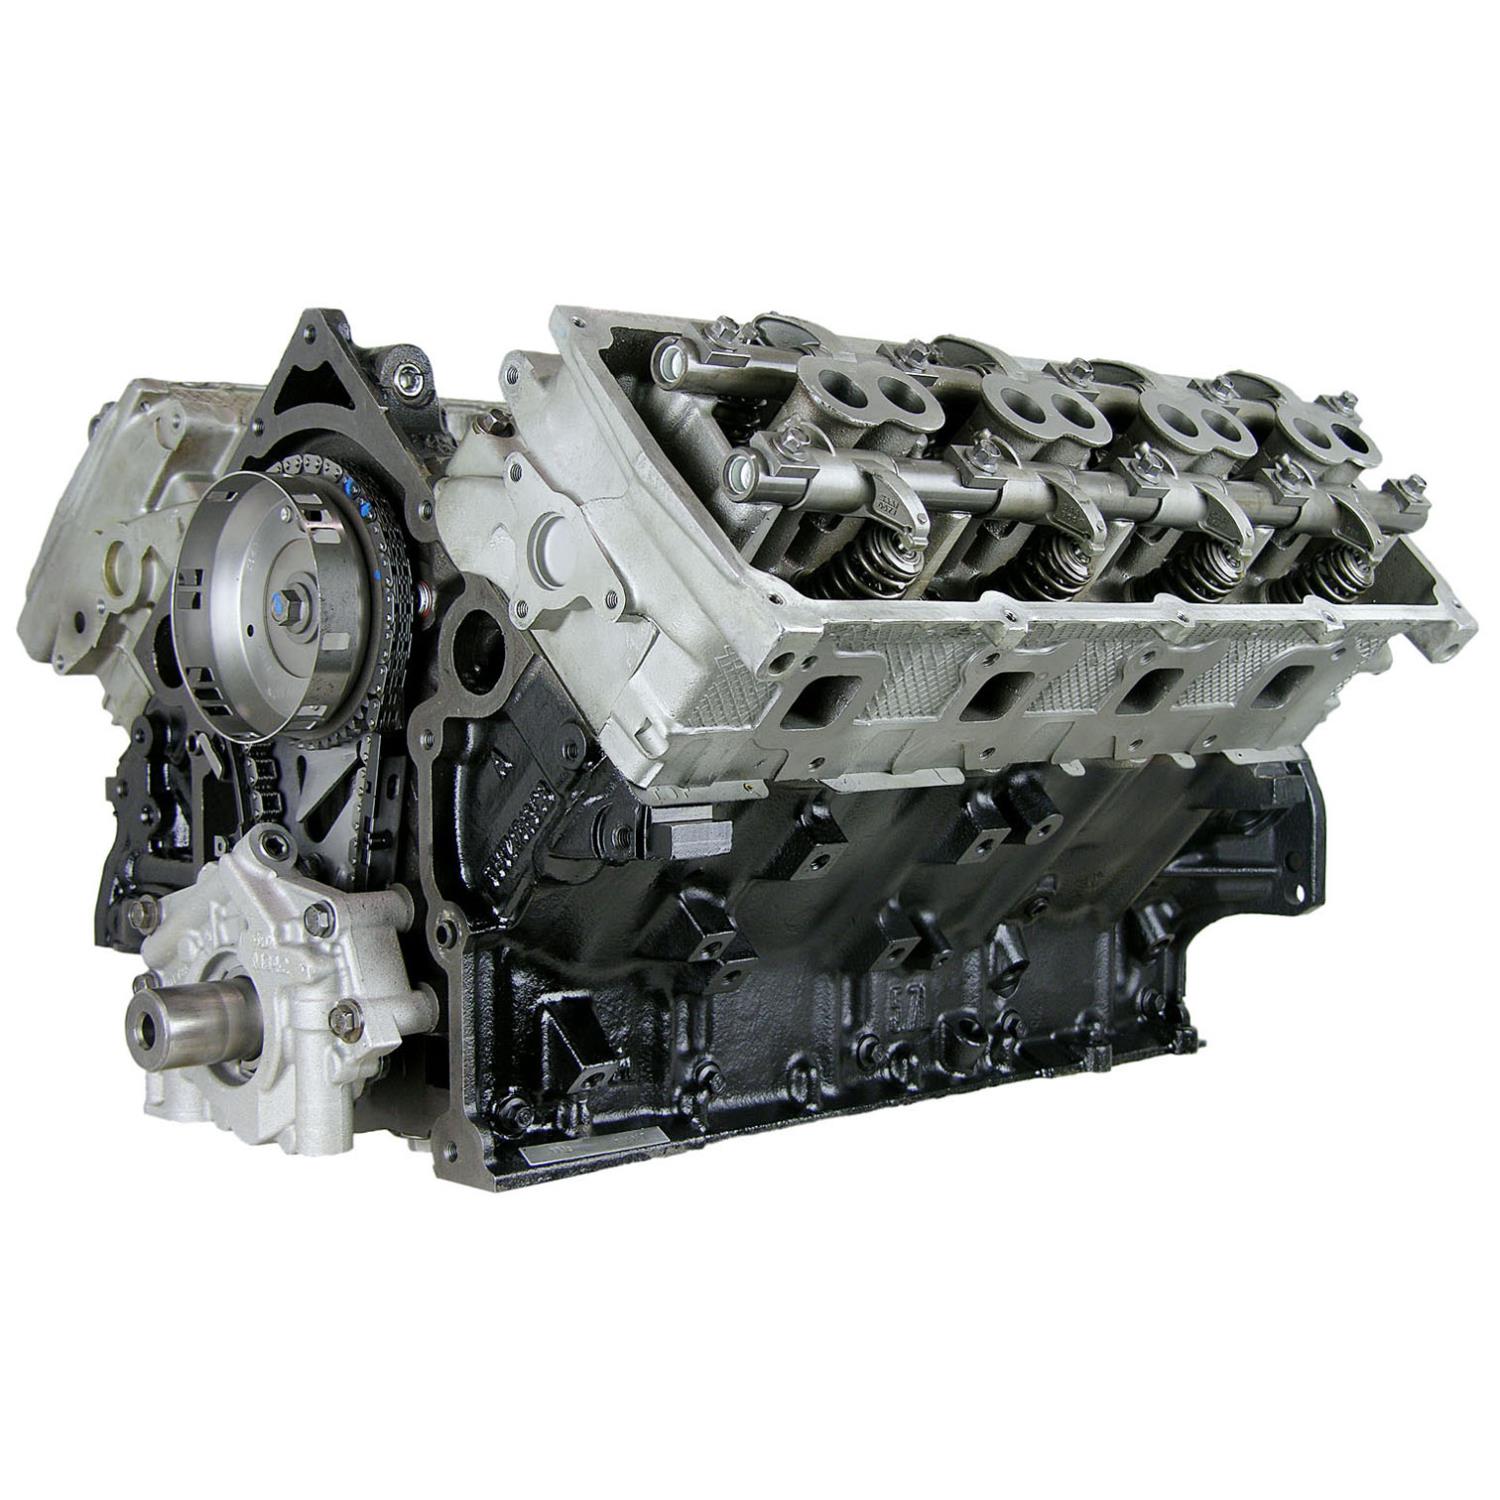 HP103 High Performance Crate Engine 2003-2008 Chrysler Gen III HEMI  5.7L / 400HP / 400TQ